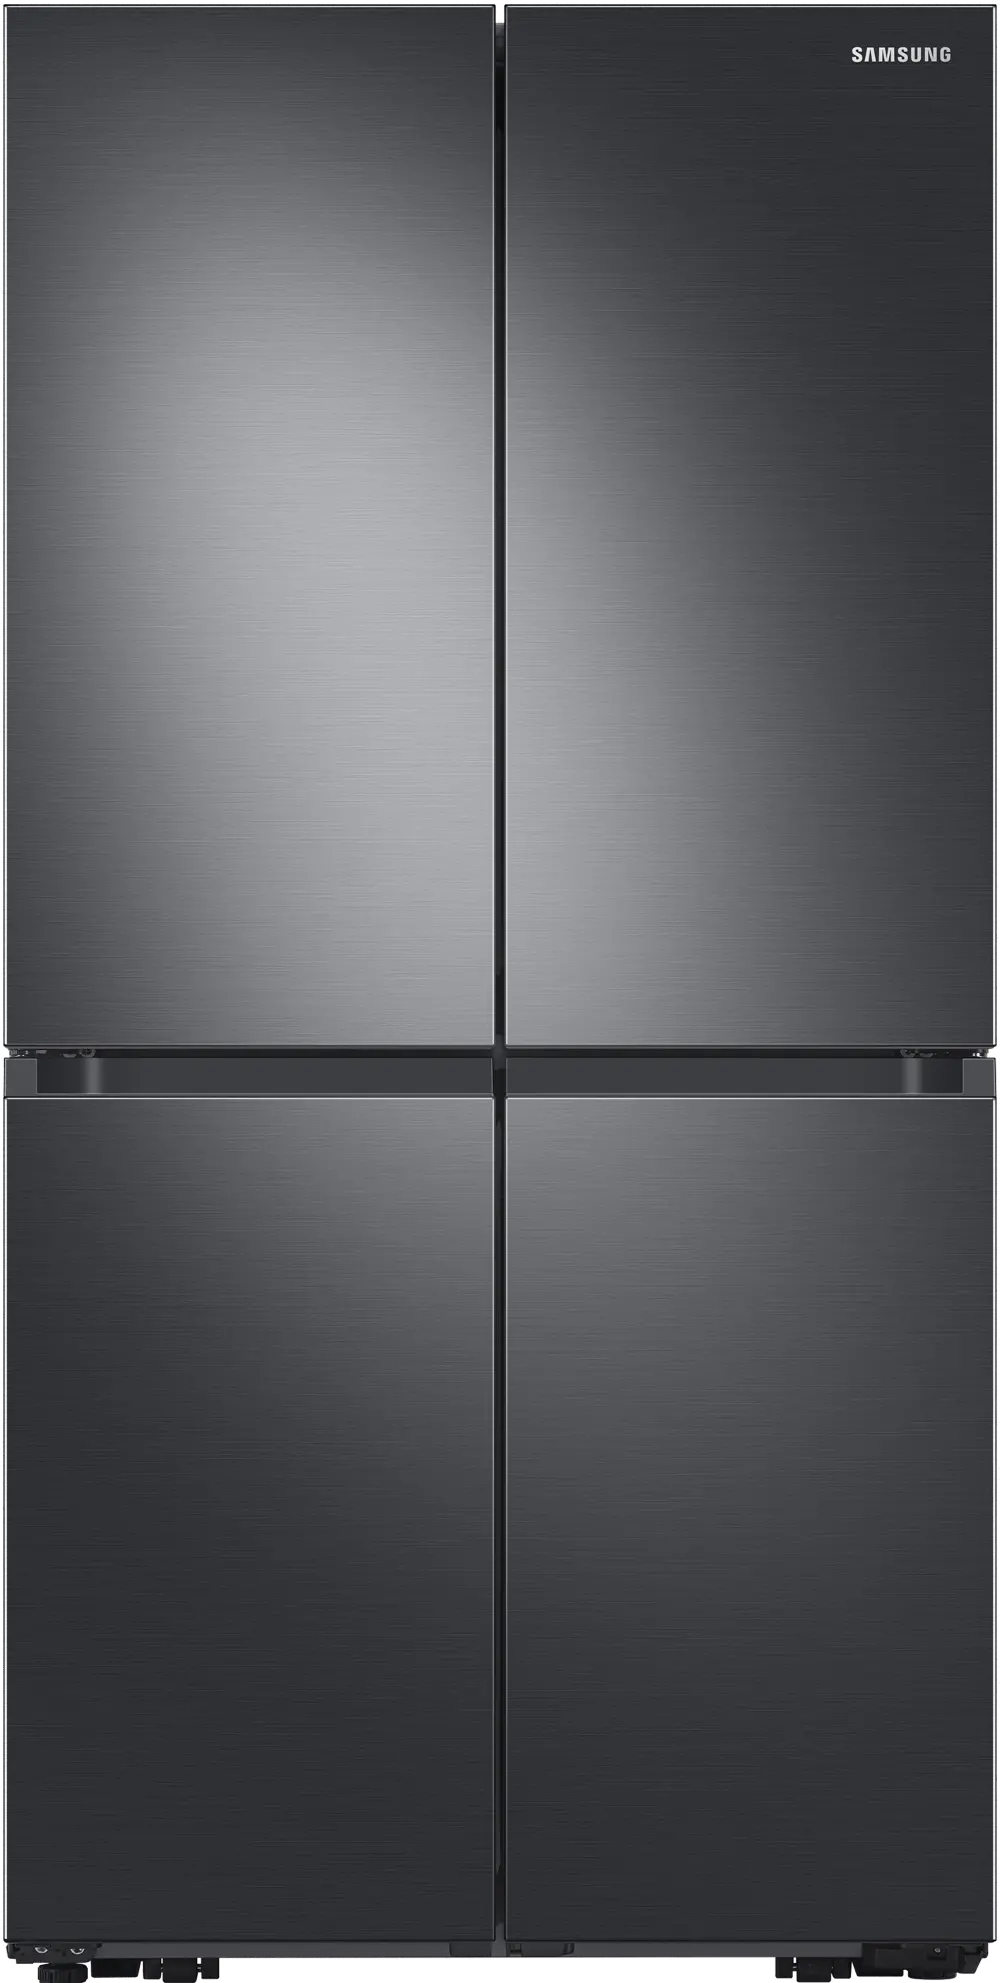 RF29A9671SG Samsung 29.2 cu ft 4 Door Refrigerator - Black Stainless Steel-1